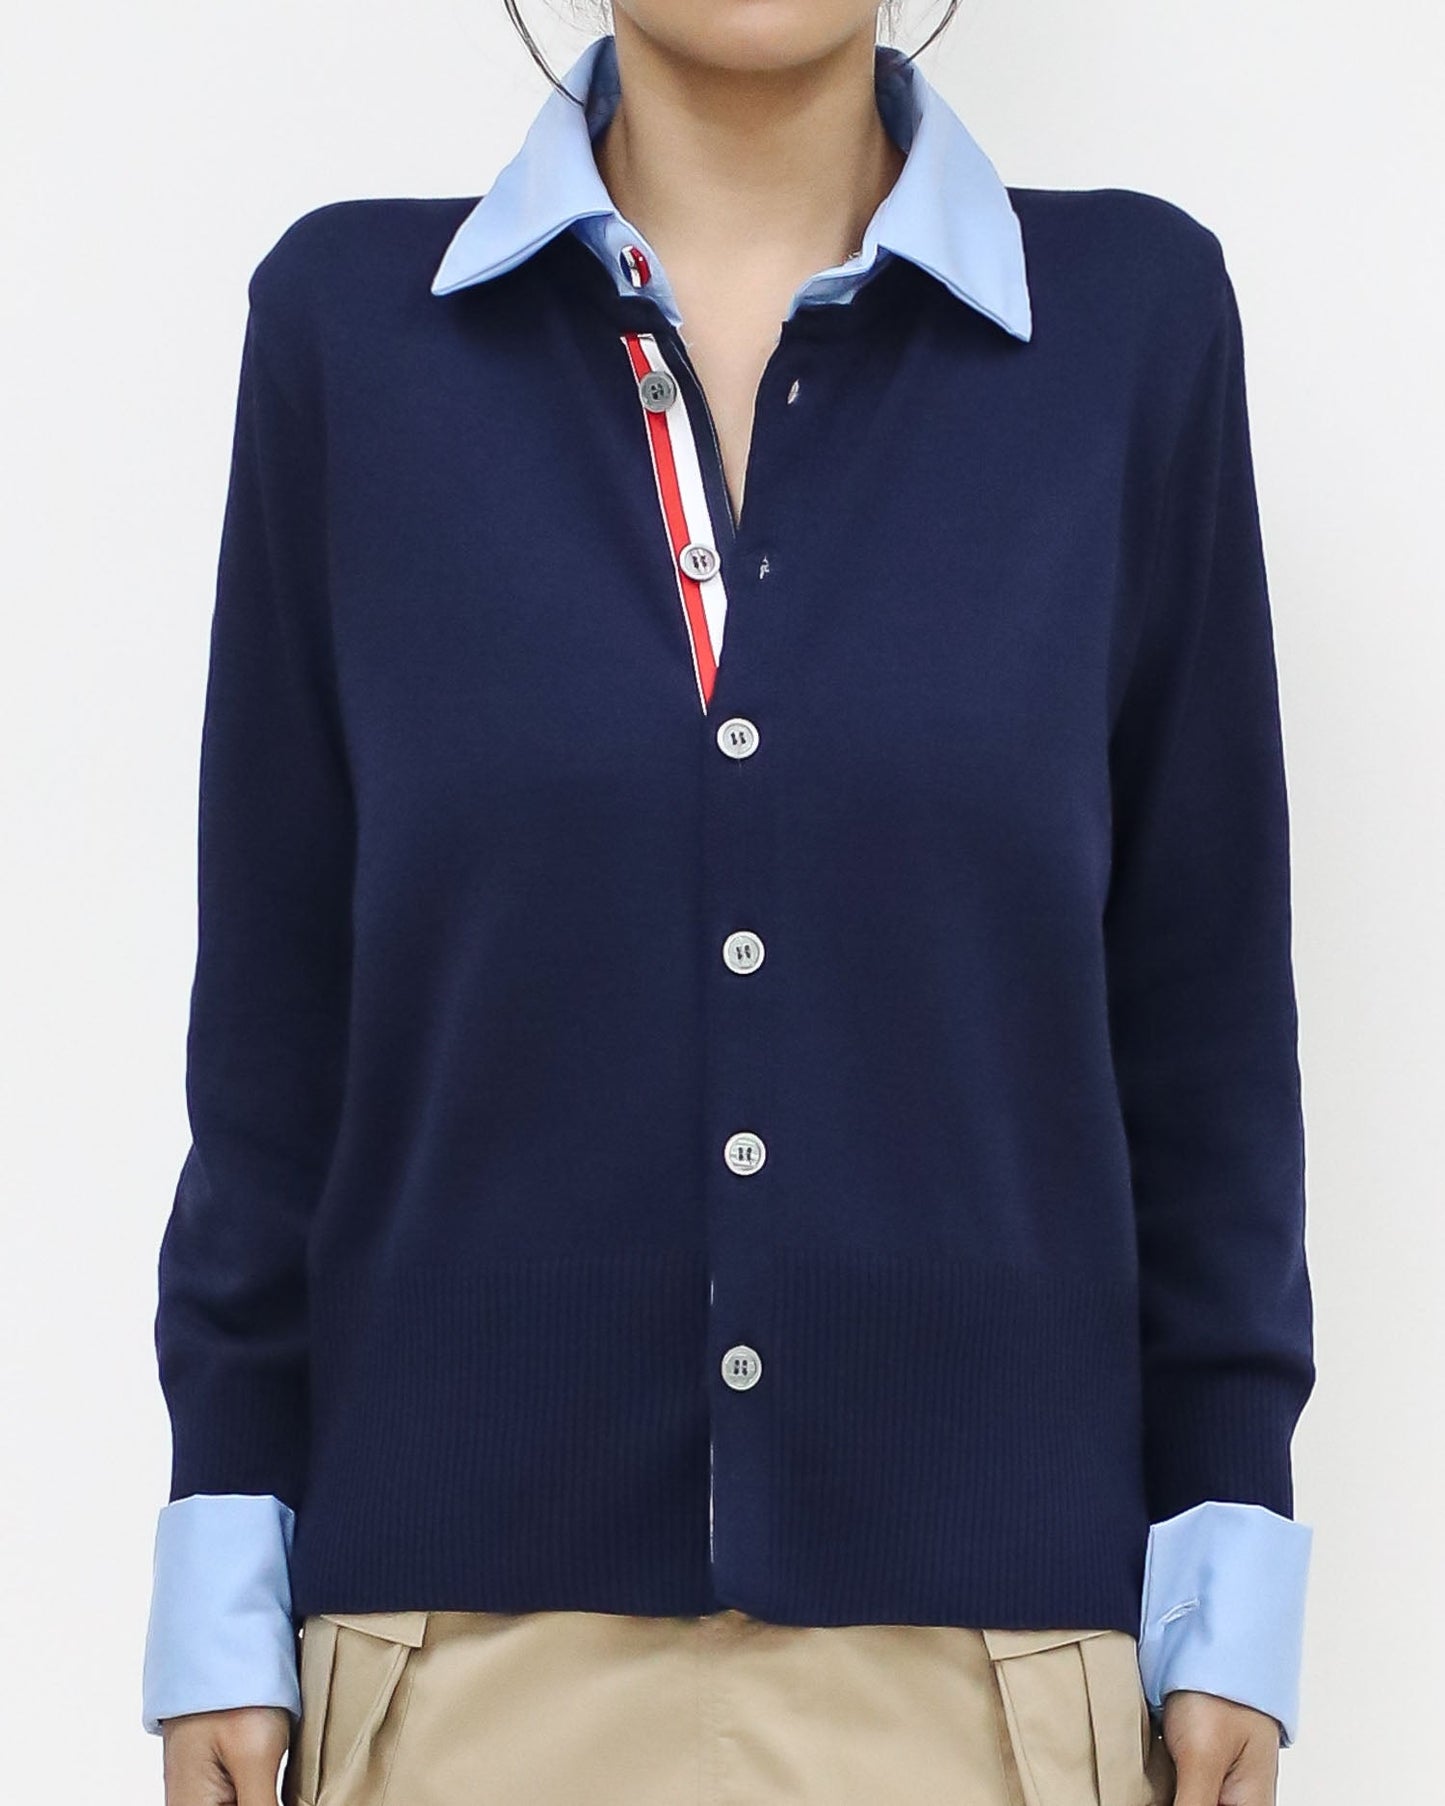 navy w/ blue shirt collar & cuffs knitted top *pre-order*